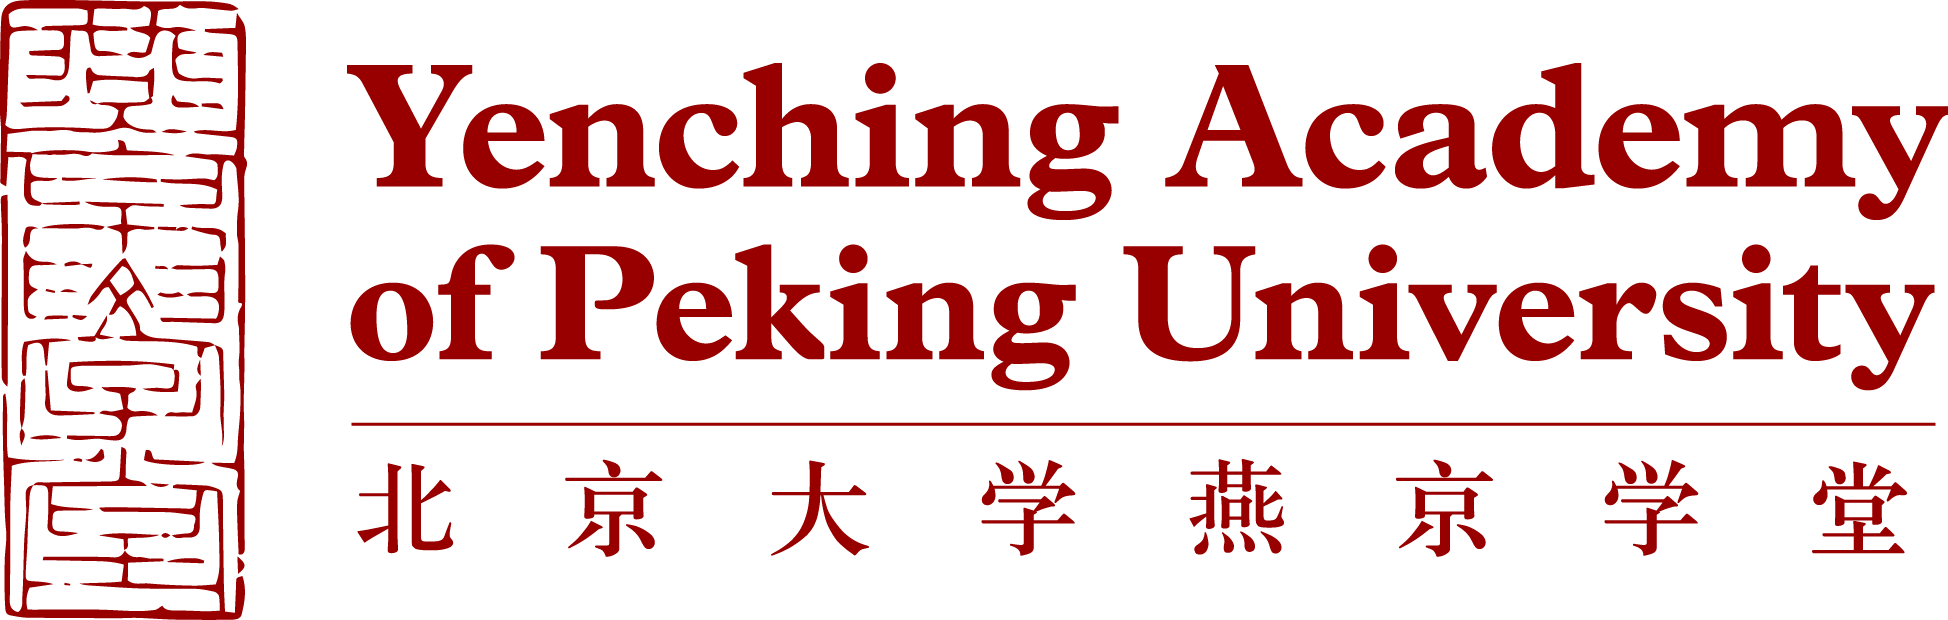 Yenching Academy of Peking University logo